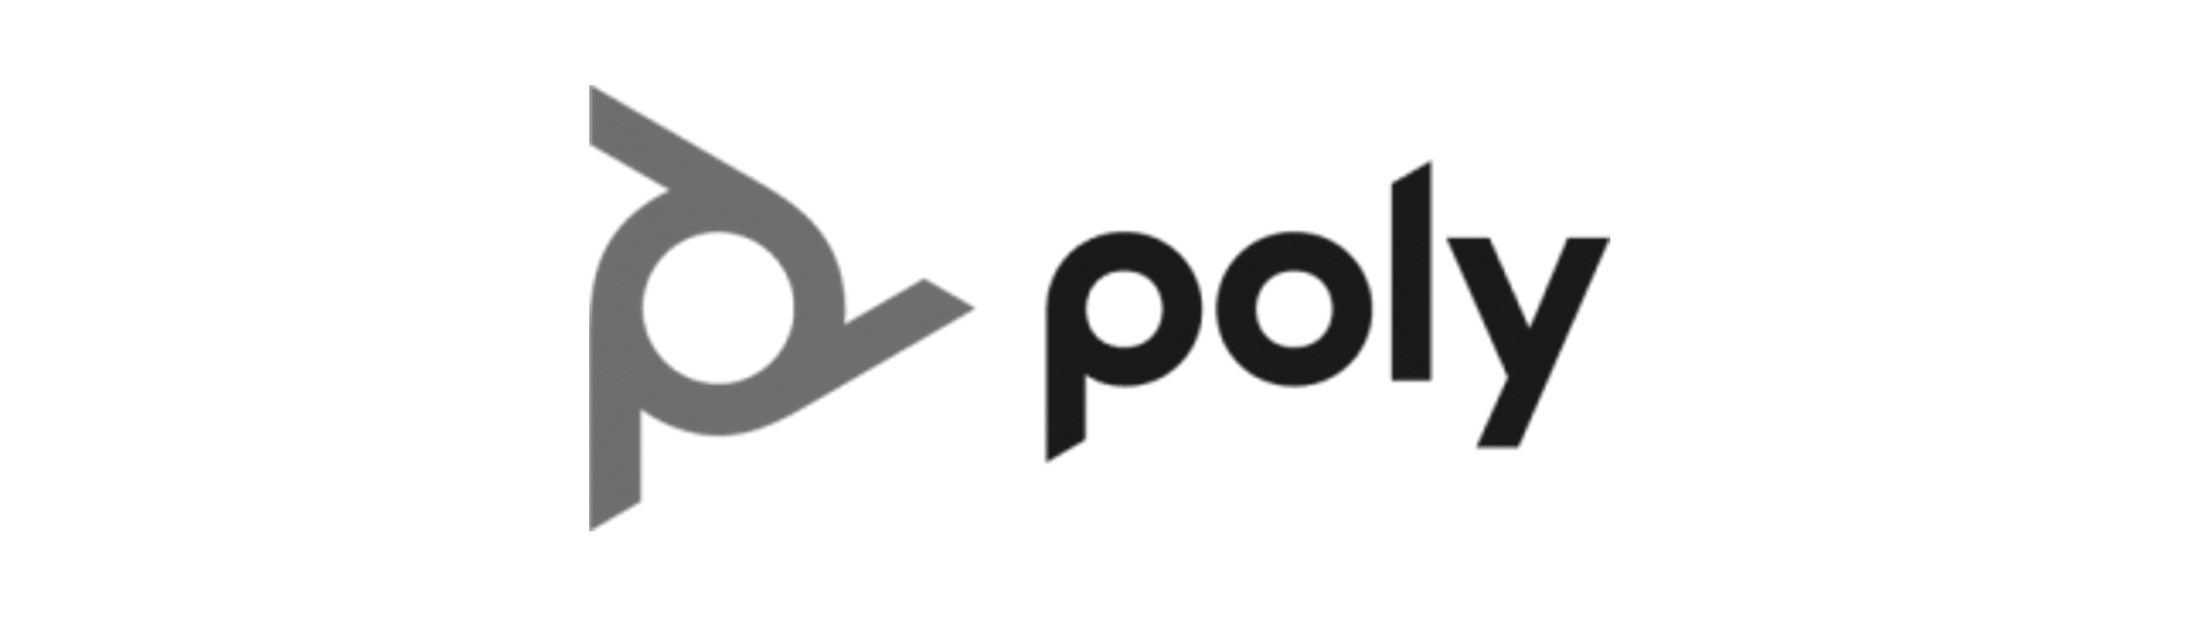 poly-logo-02